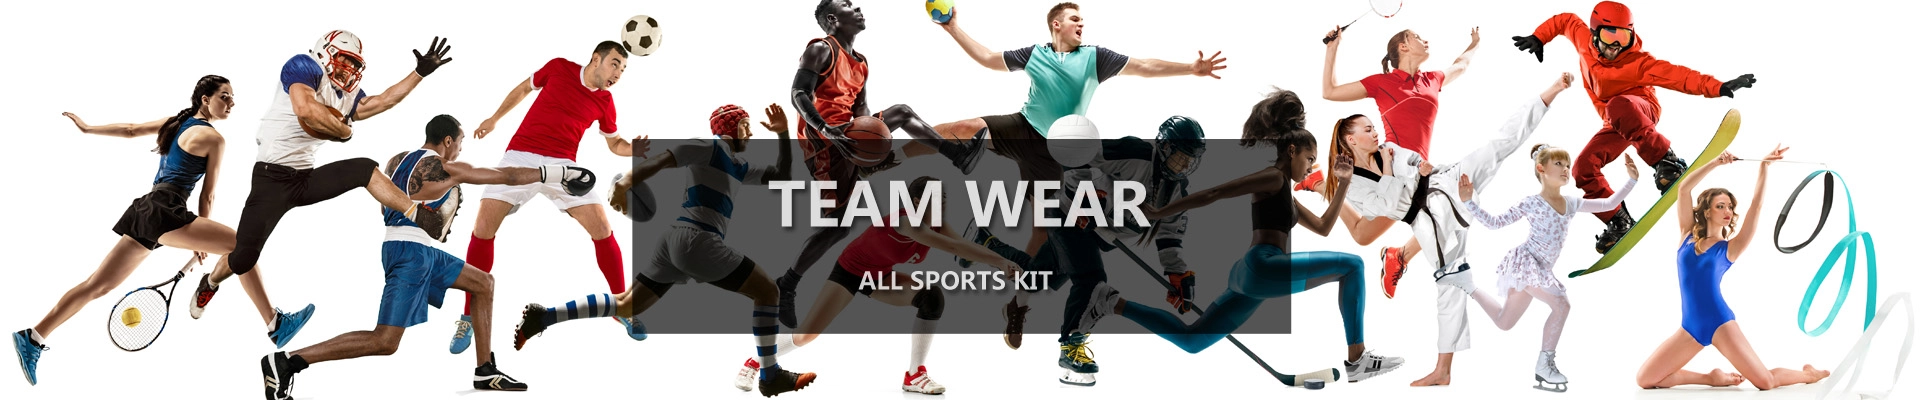 custom made sports wear and team wear